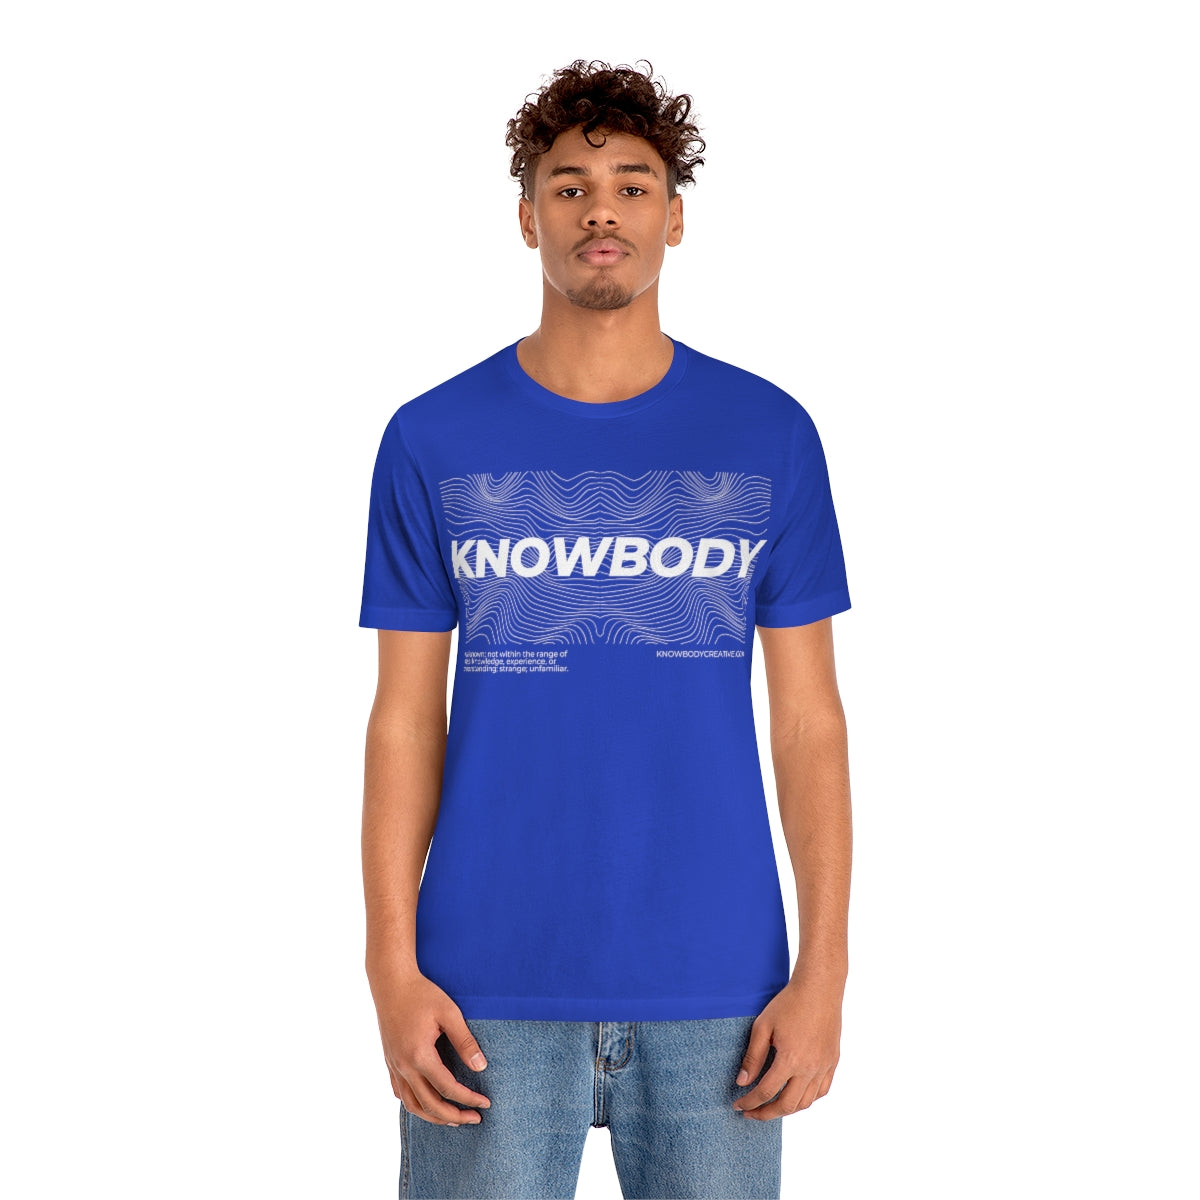 Knowbody Unisex T-Shirt